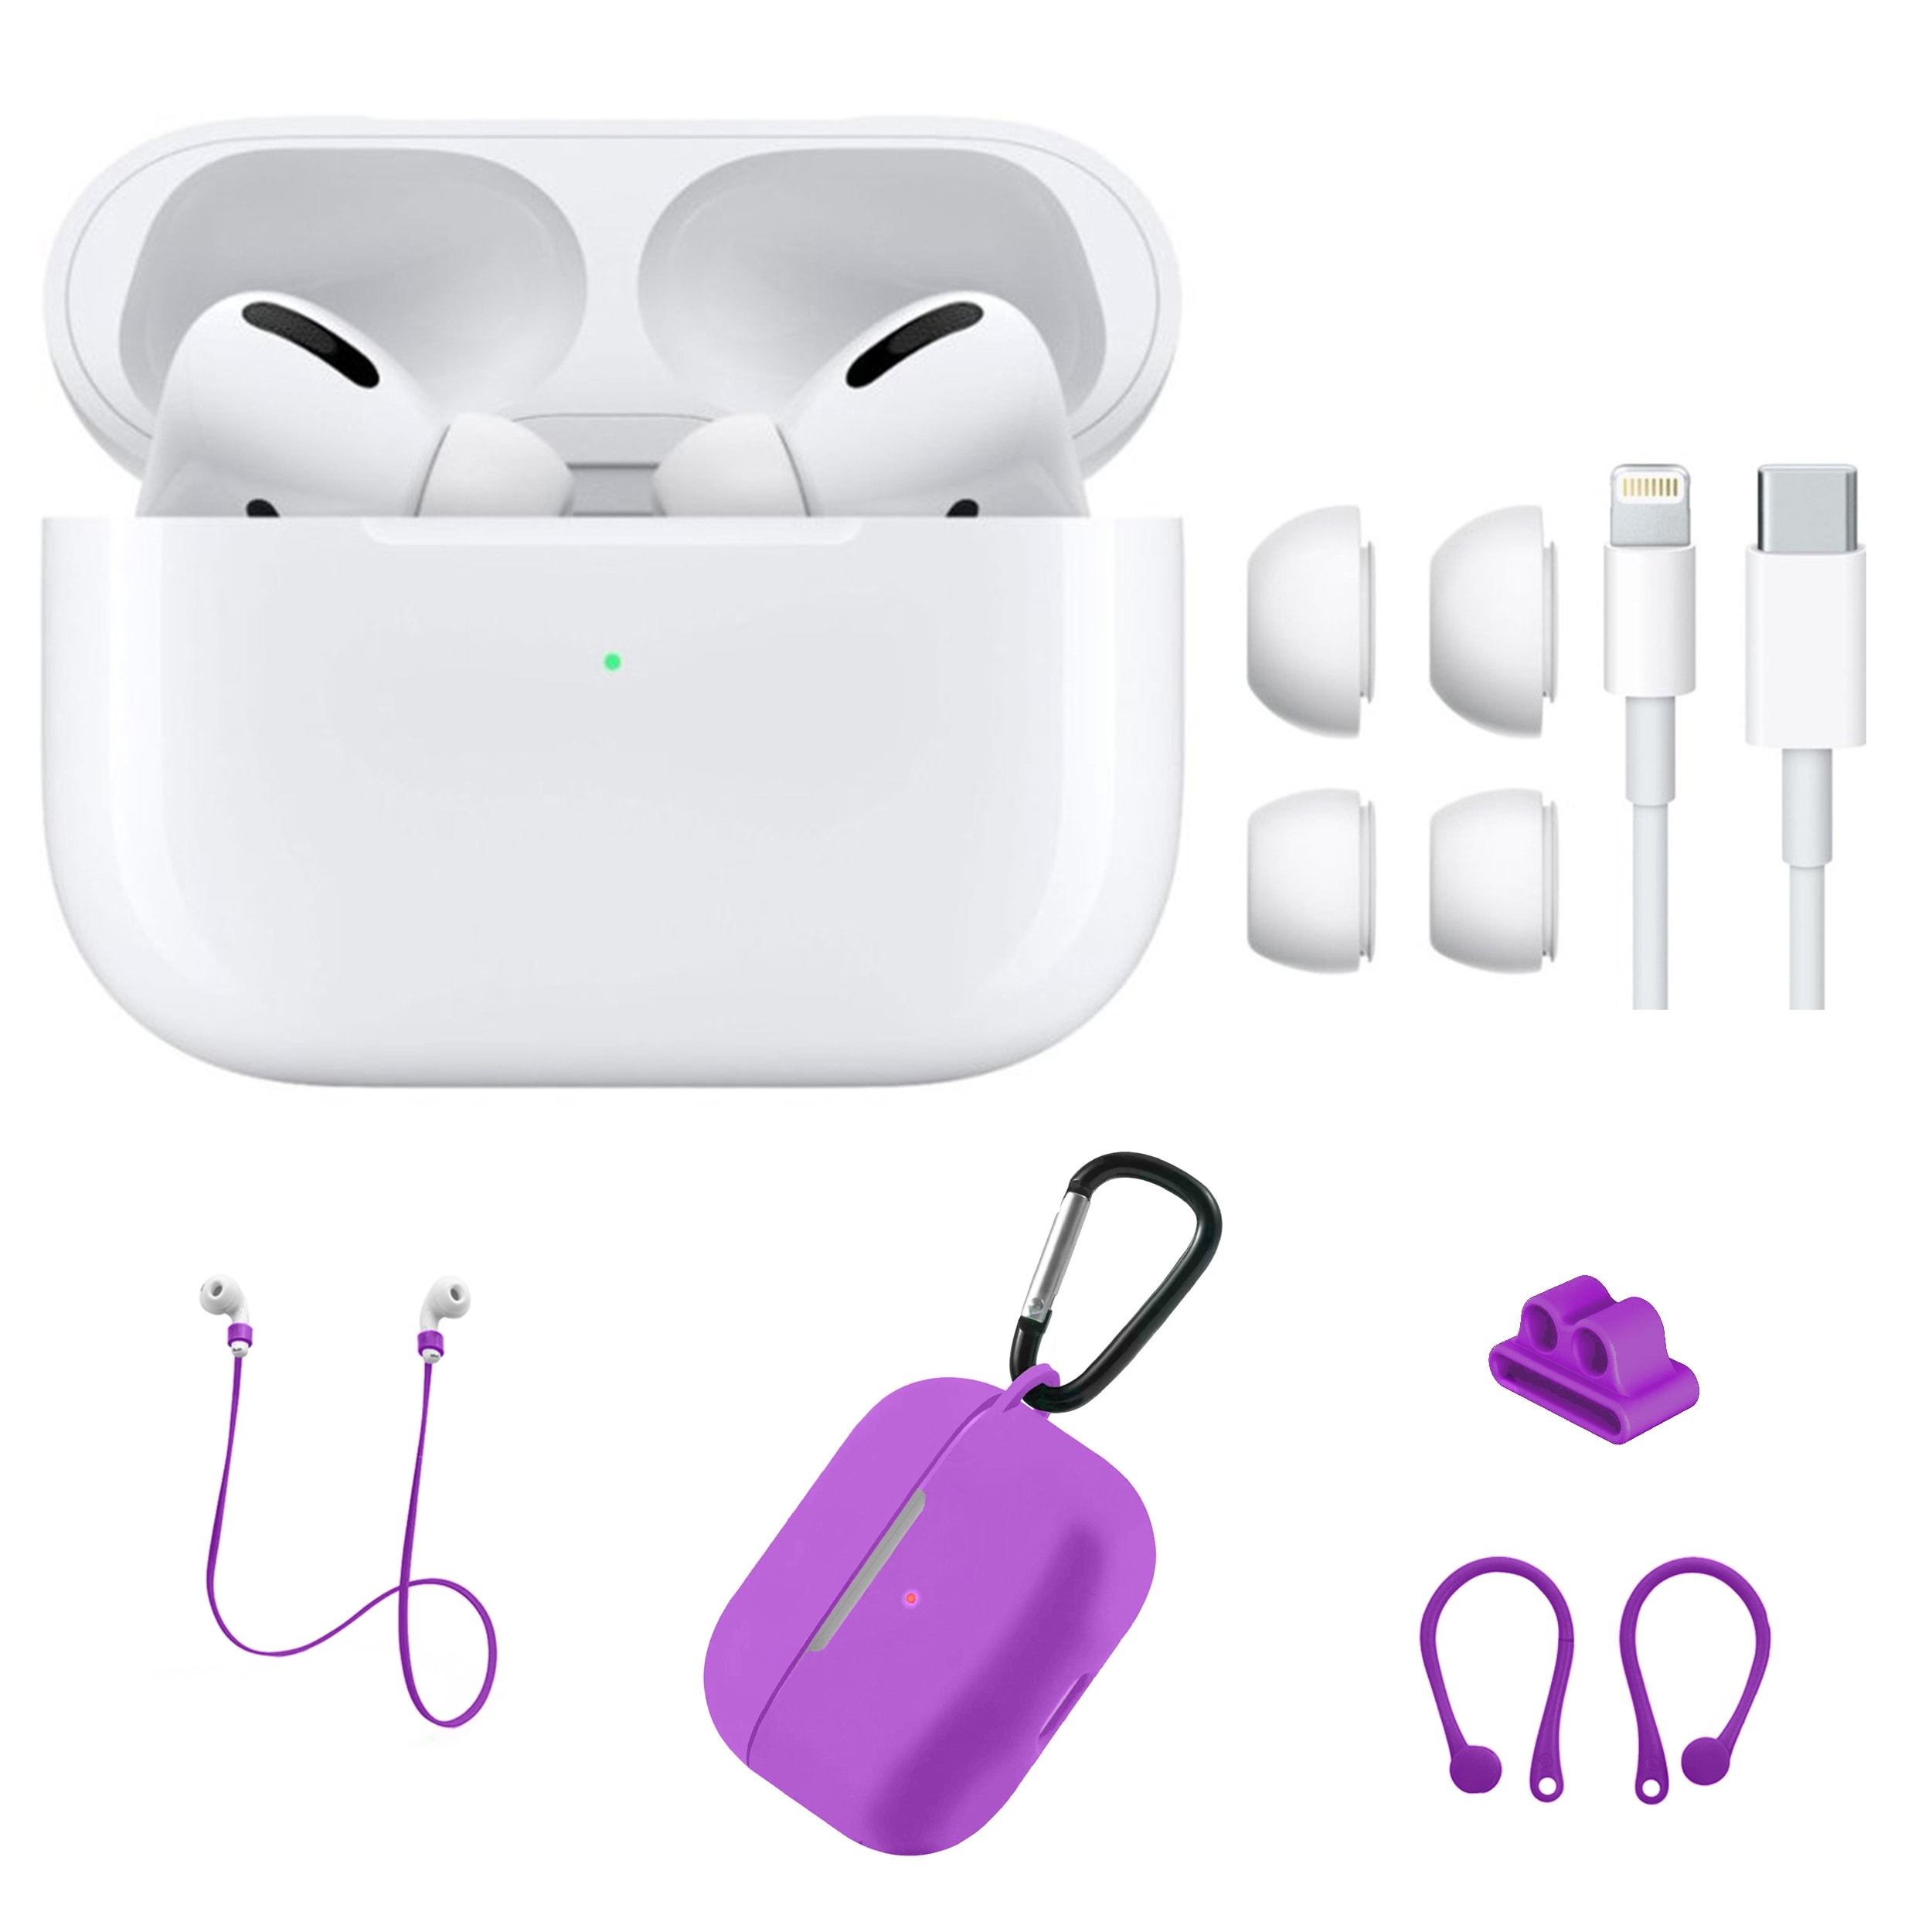 Apple AirPod Pro with Purple Silicone Accessories